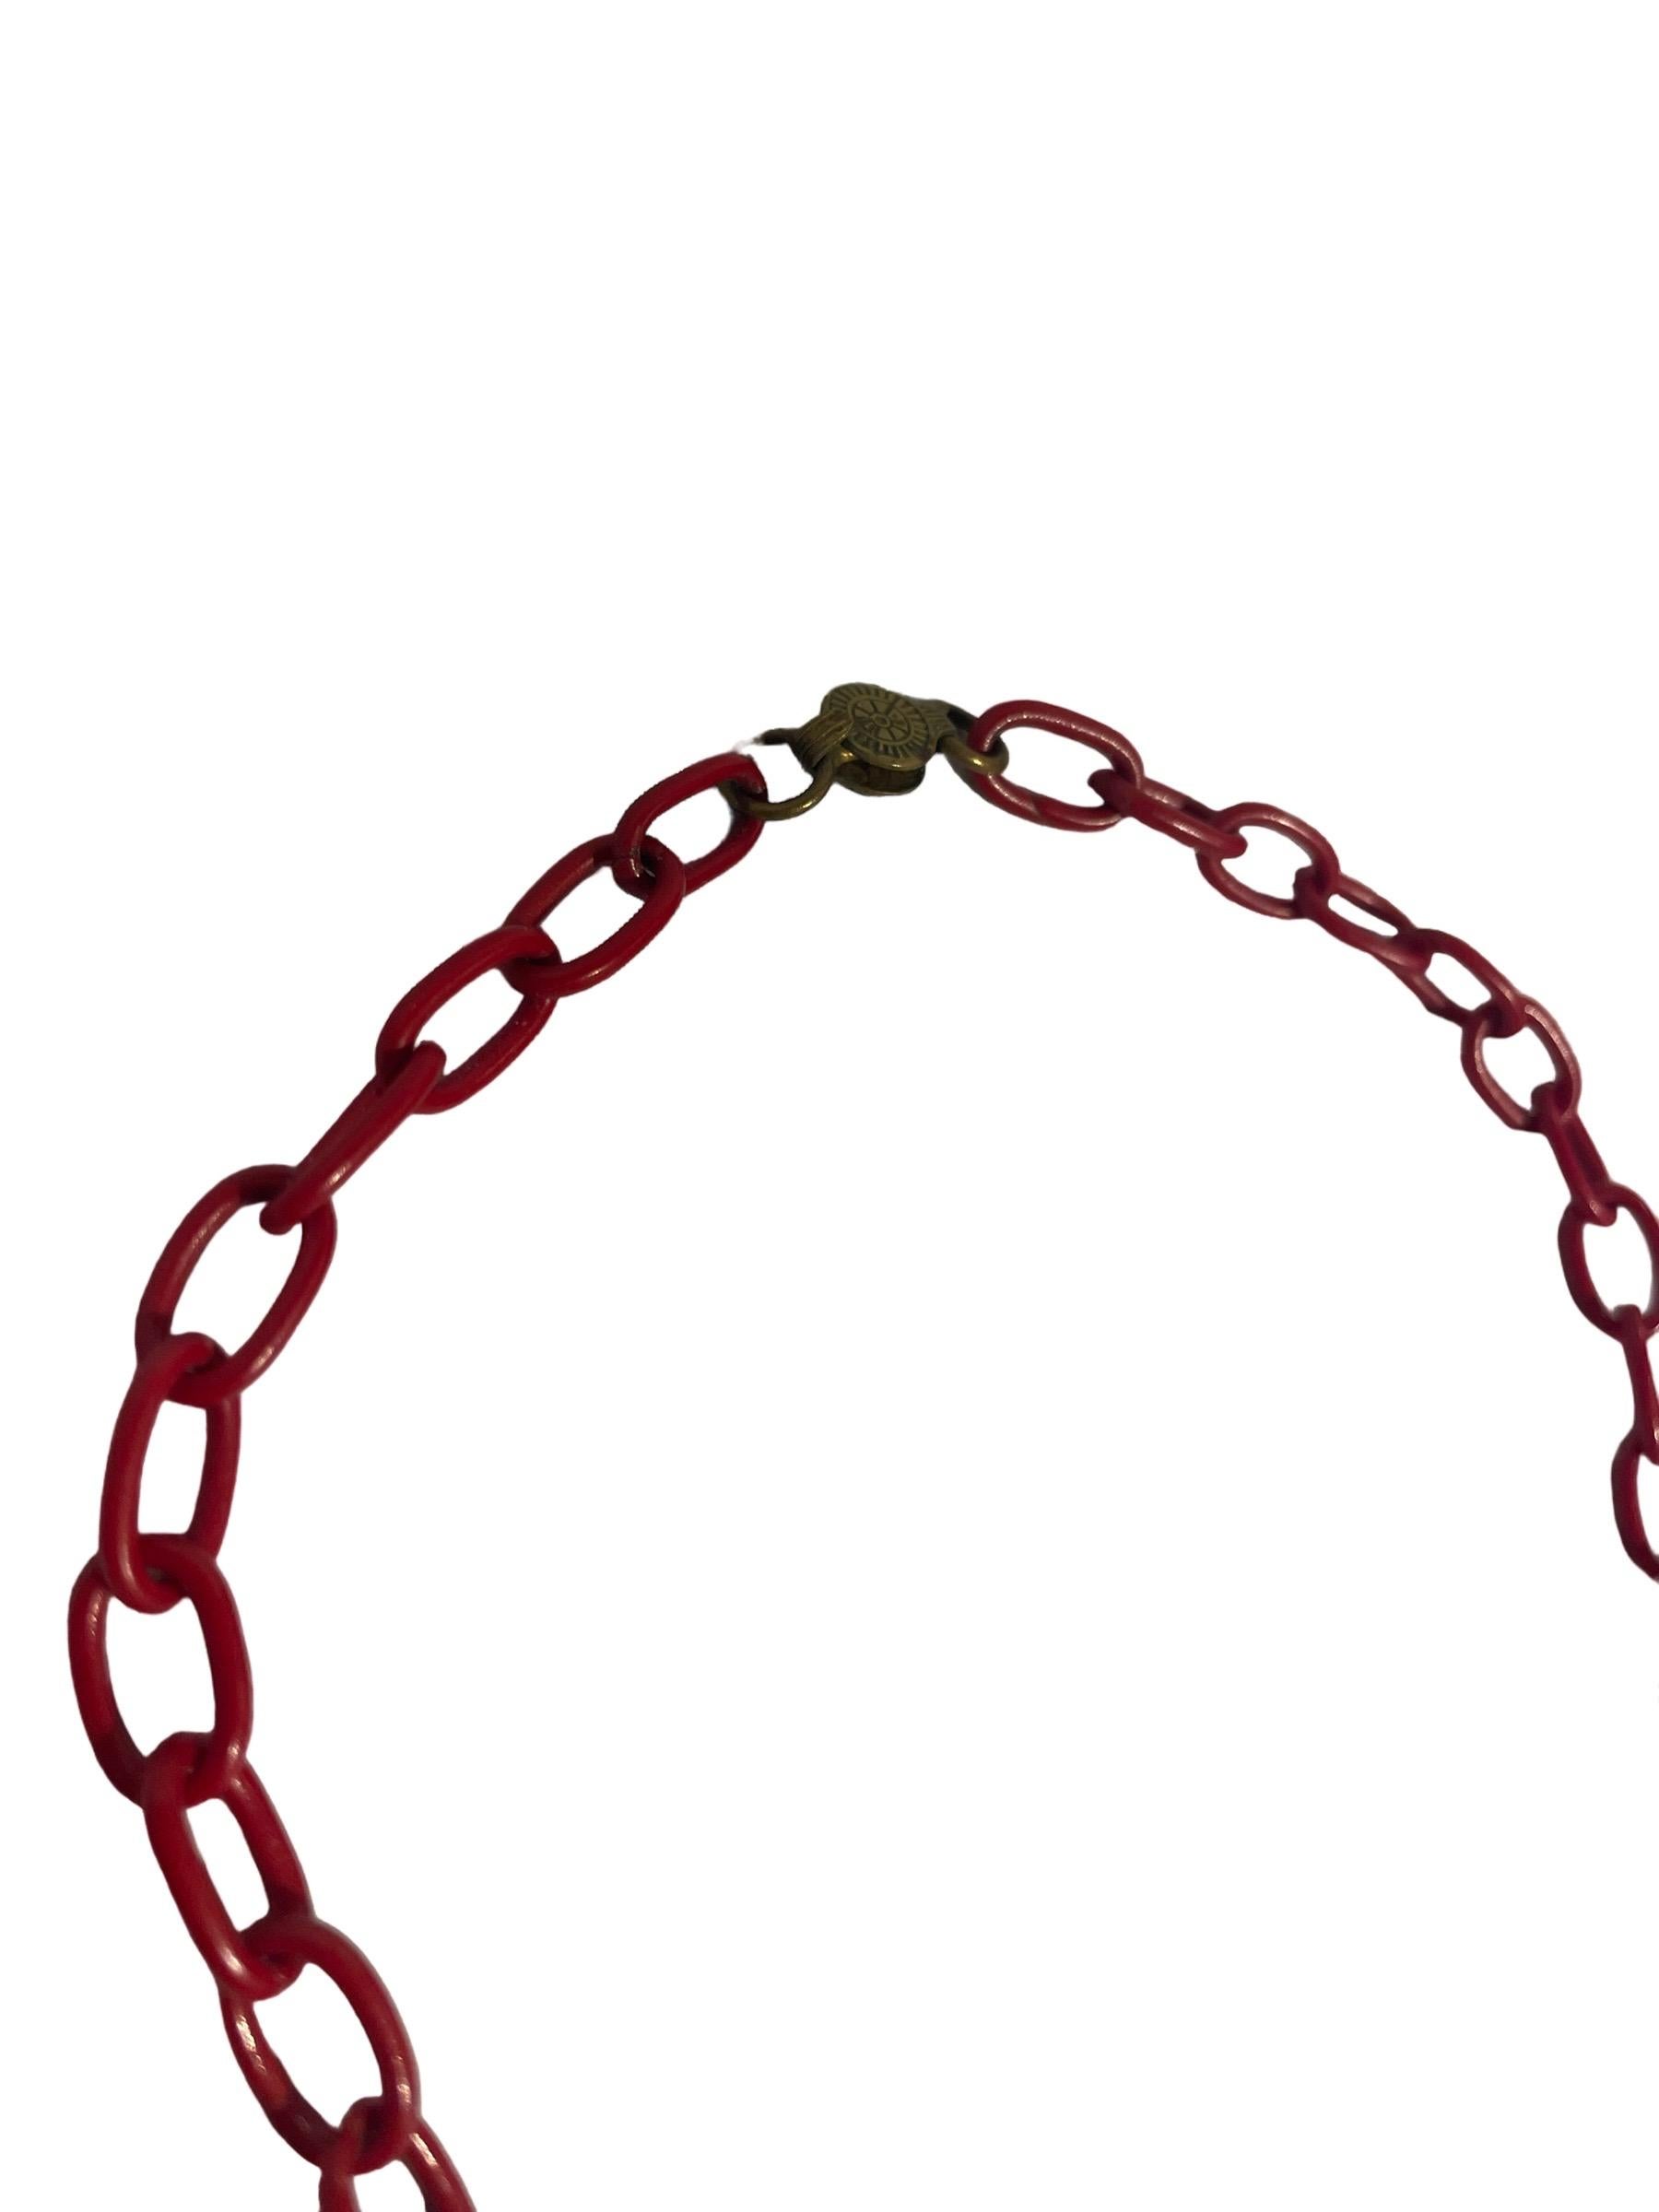 1950s Cherry Red Bakelite Beaded Chain Necklace

Length: 17